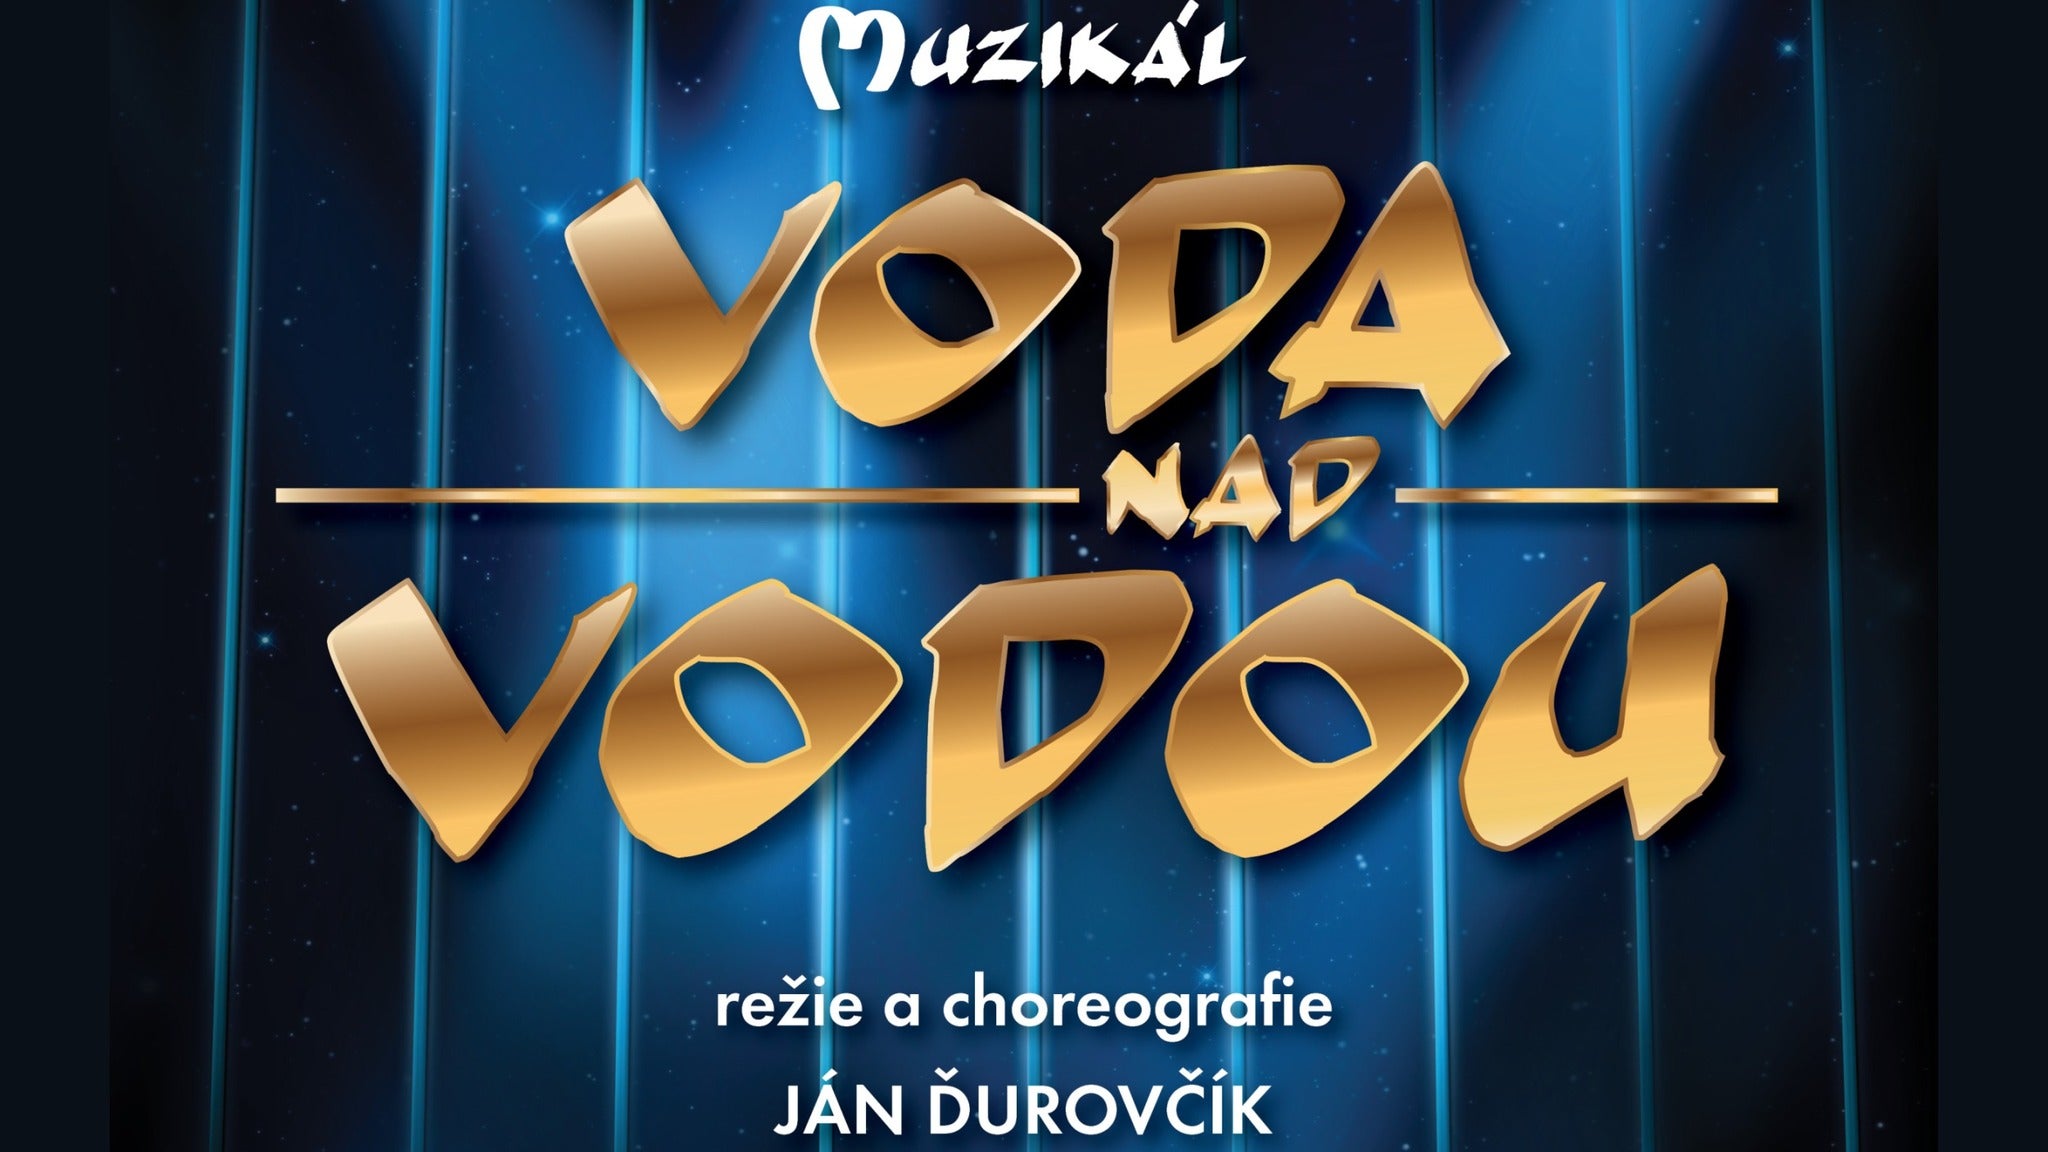 VODA (A KREV) NAD VODOU- Praha -Divadlo Kalich Praha 1 Jungmannova 9, Praha 1 11000